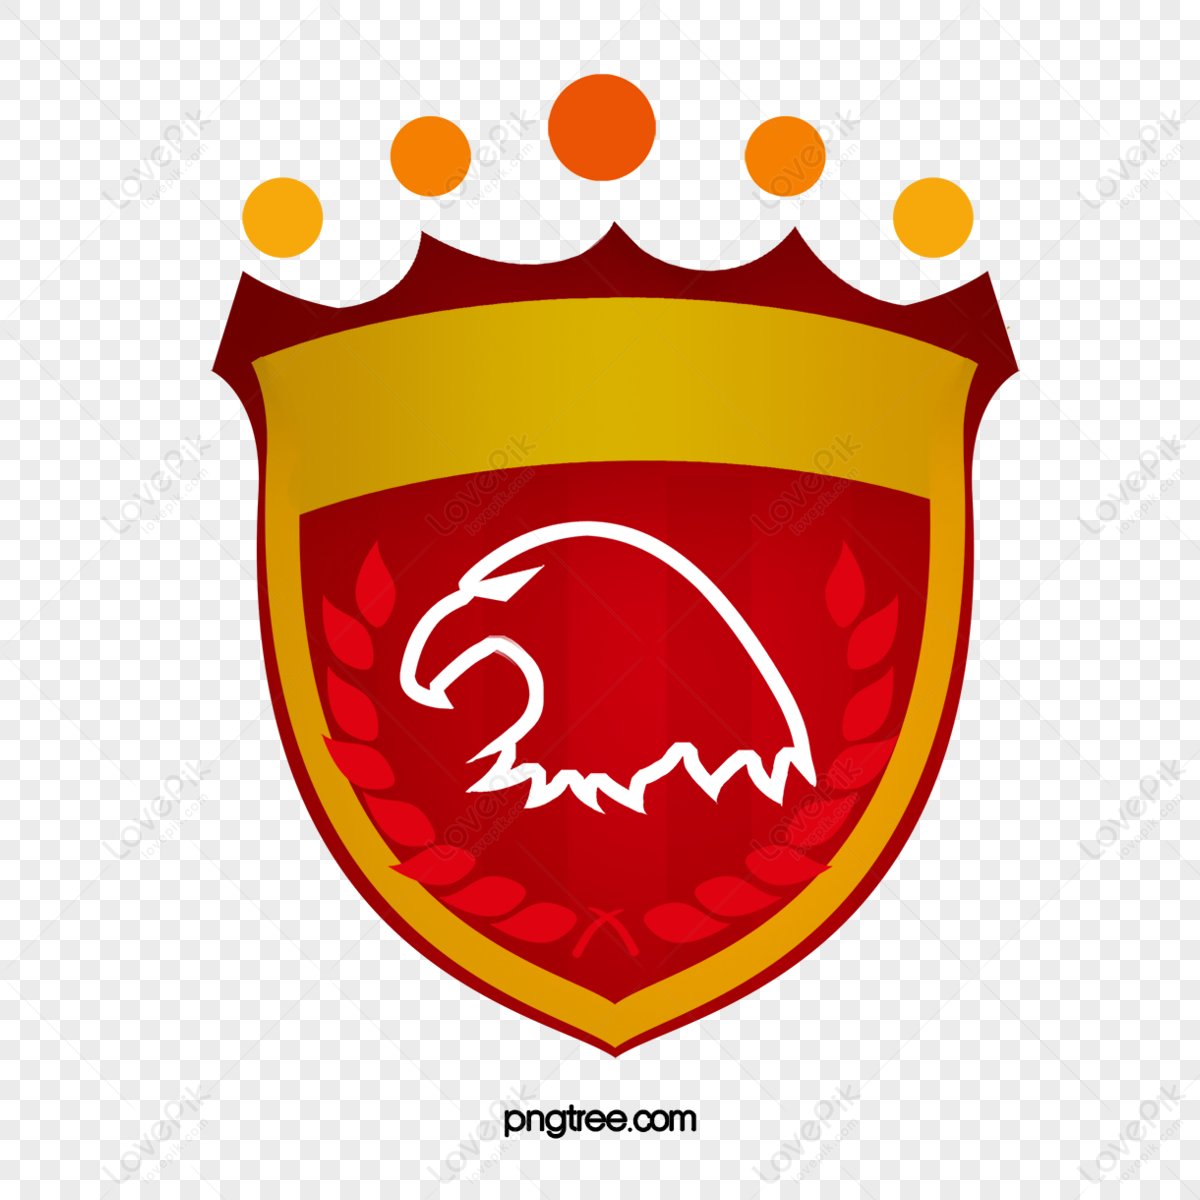 Washington Football Team Logo, symbol, meaning, history, PNG, brand